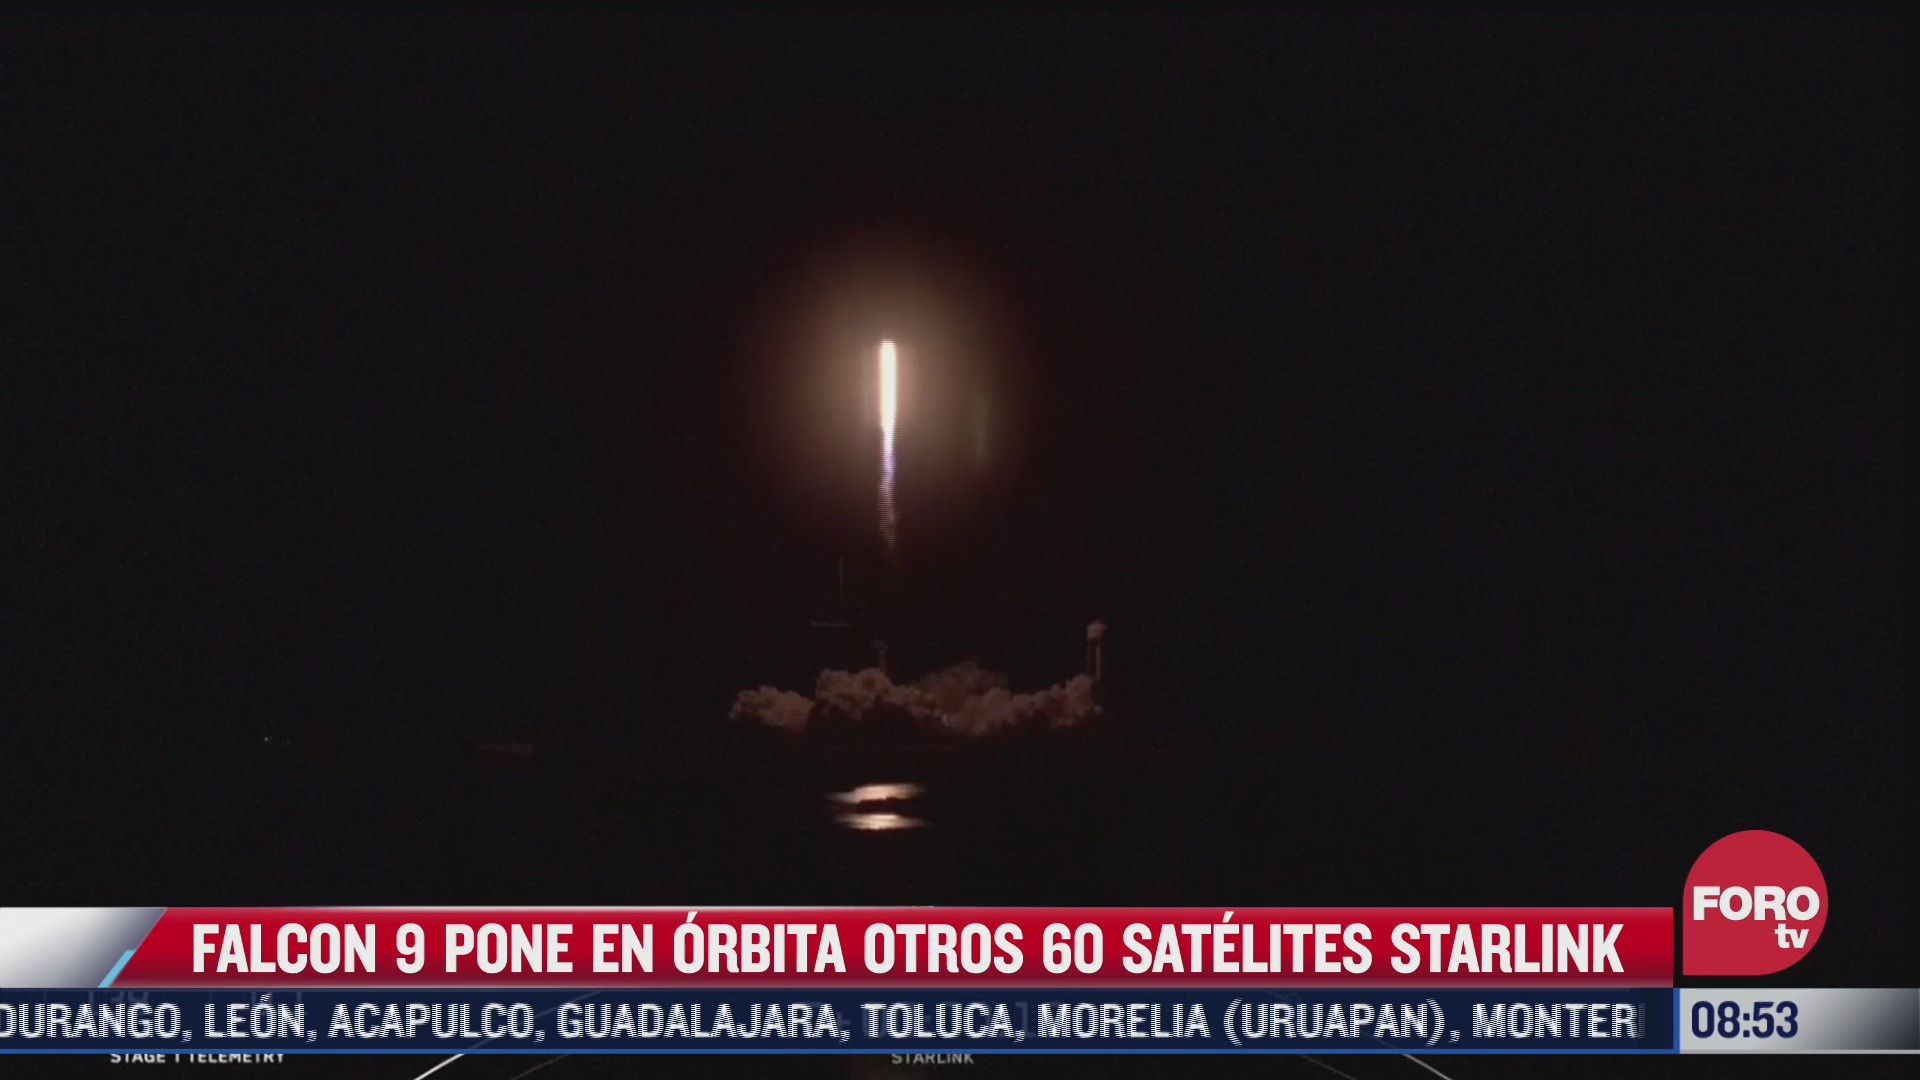 cohete falcon 9 pone en orbita 60 satelites de la red de internet starlink